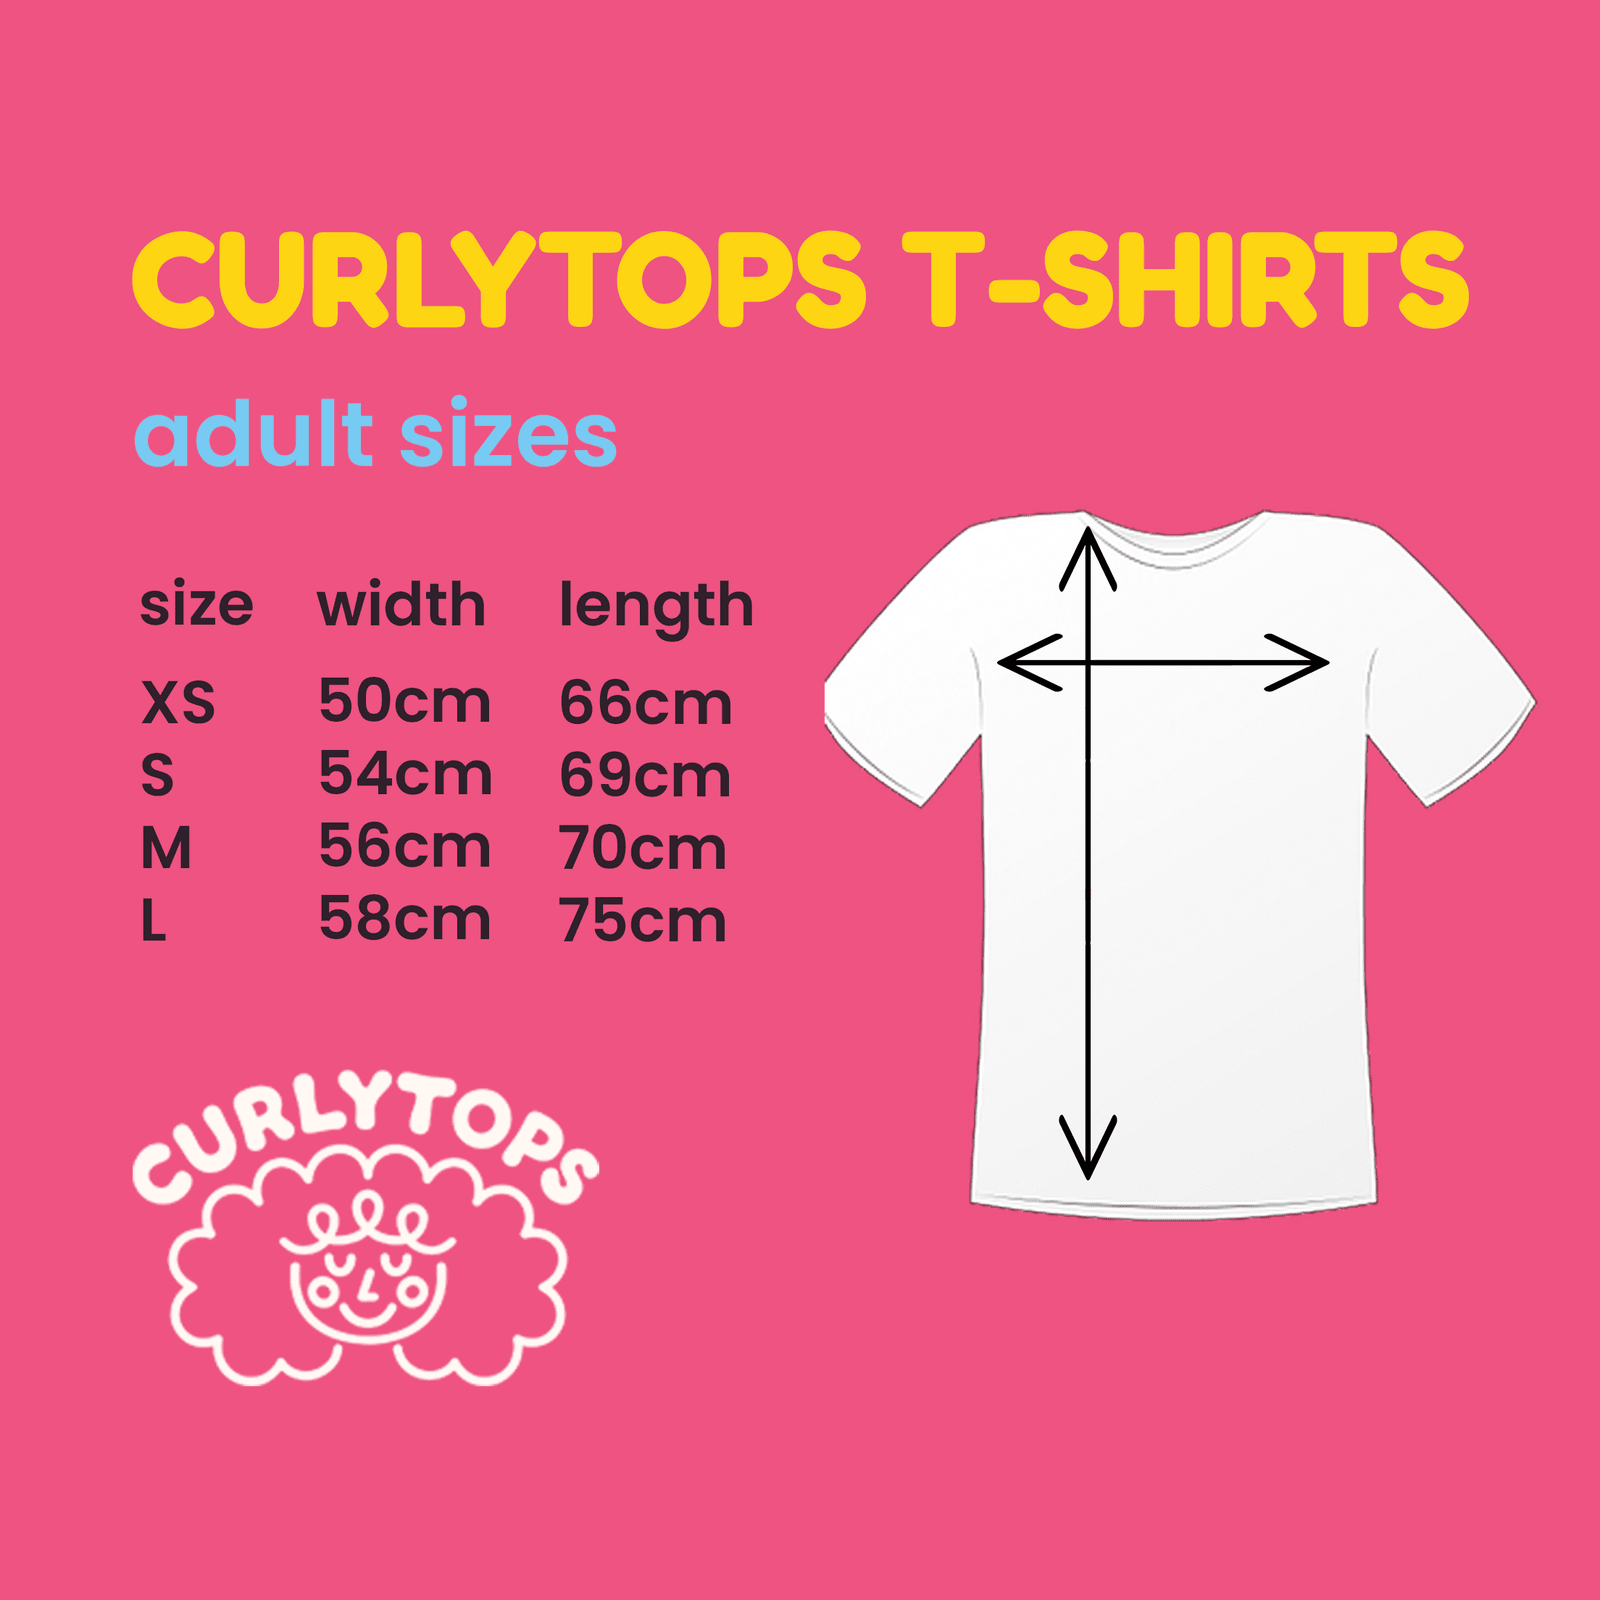 Curlytops Adult T-Shirt Sizes